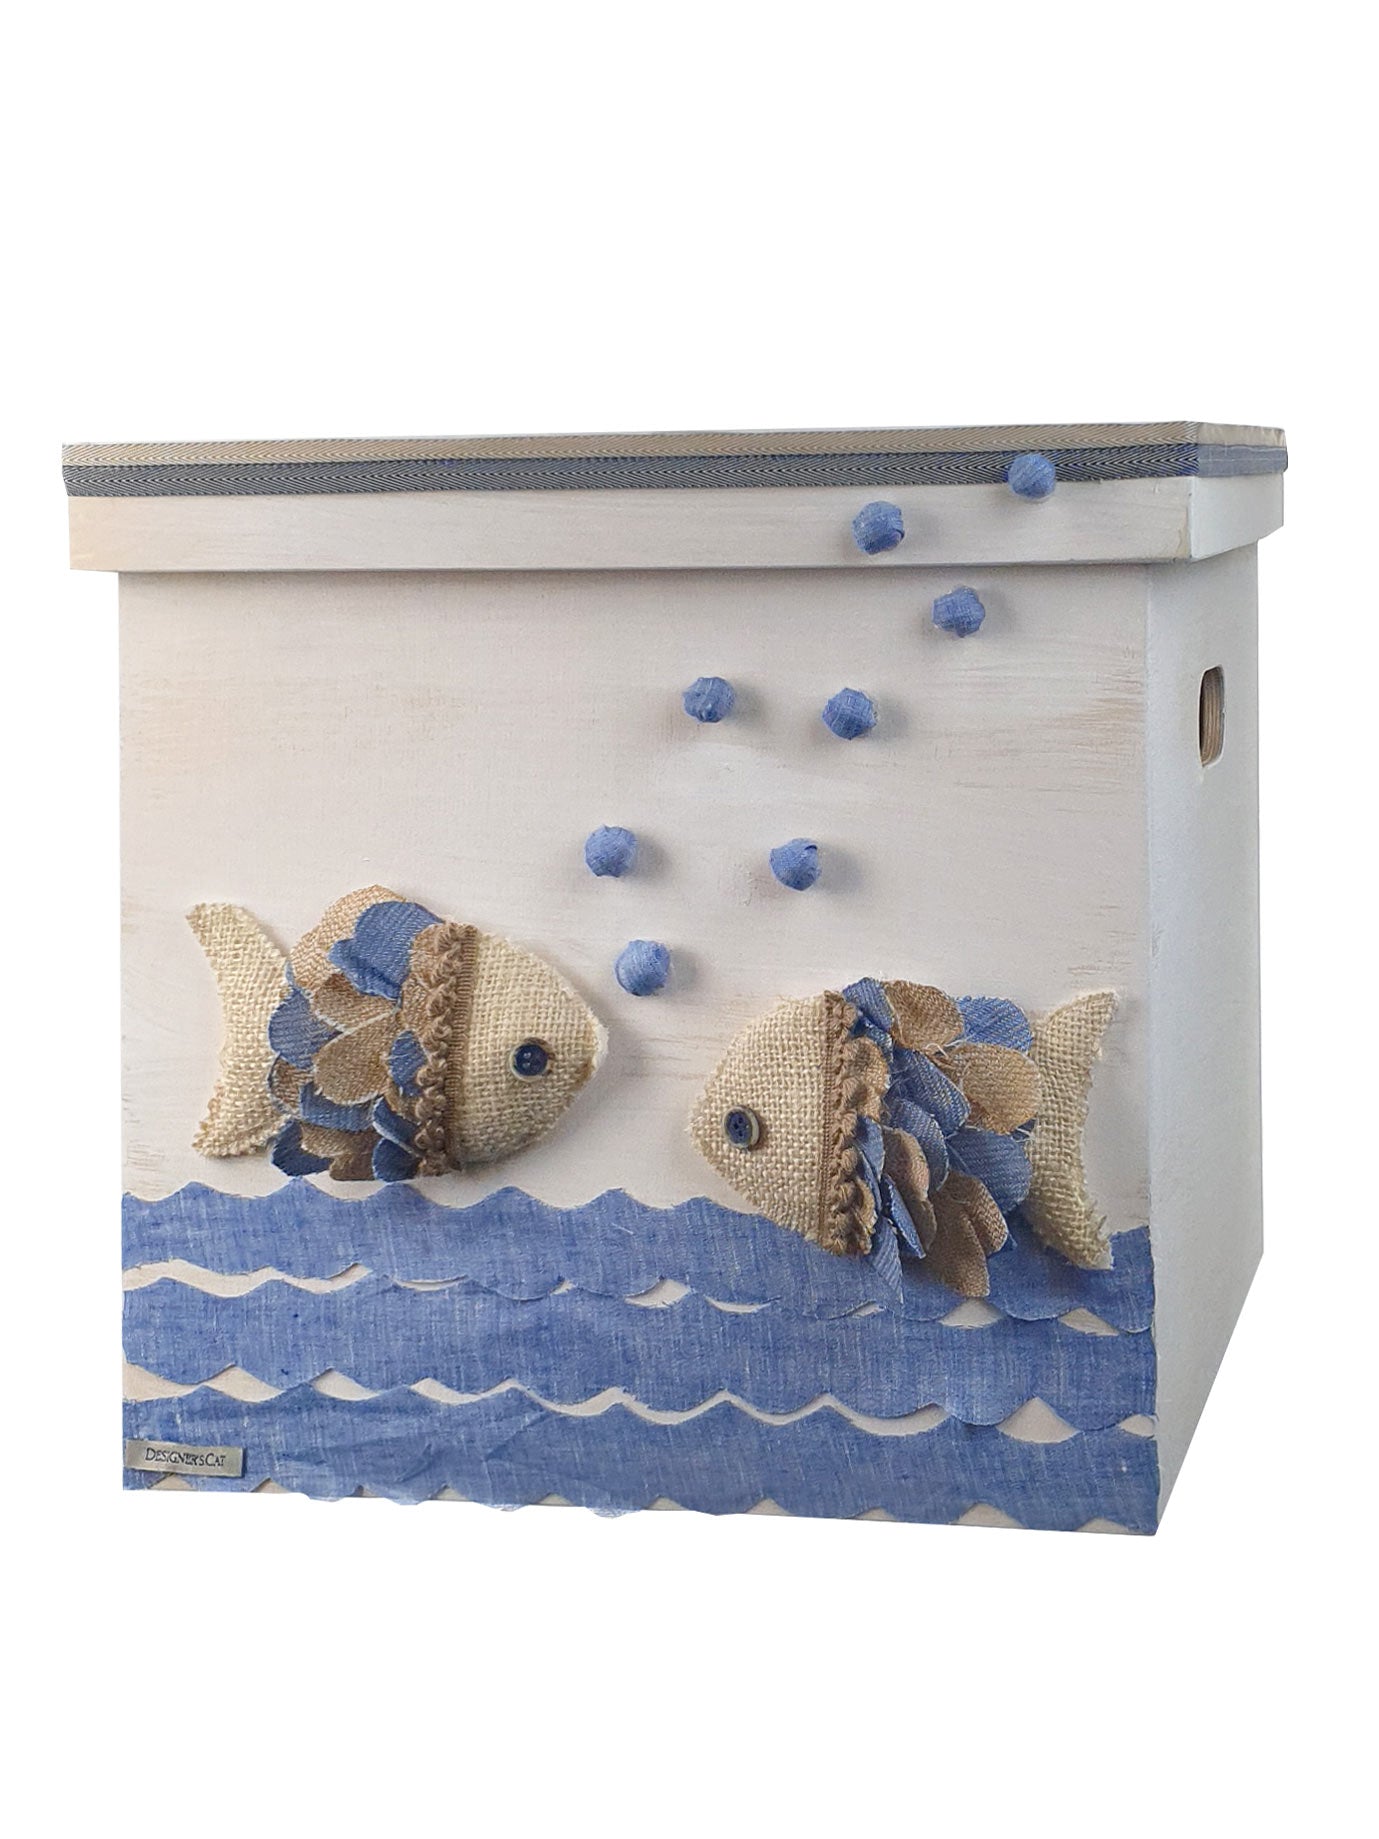 Cube wooden baptismal box - BERND